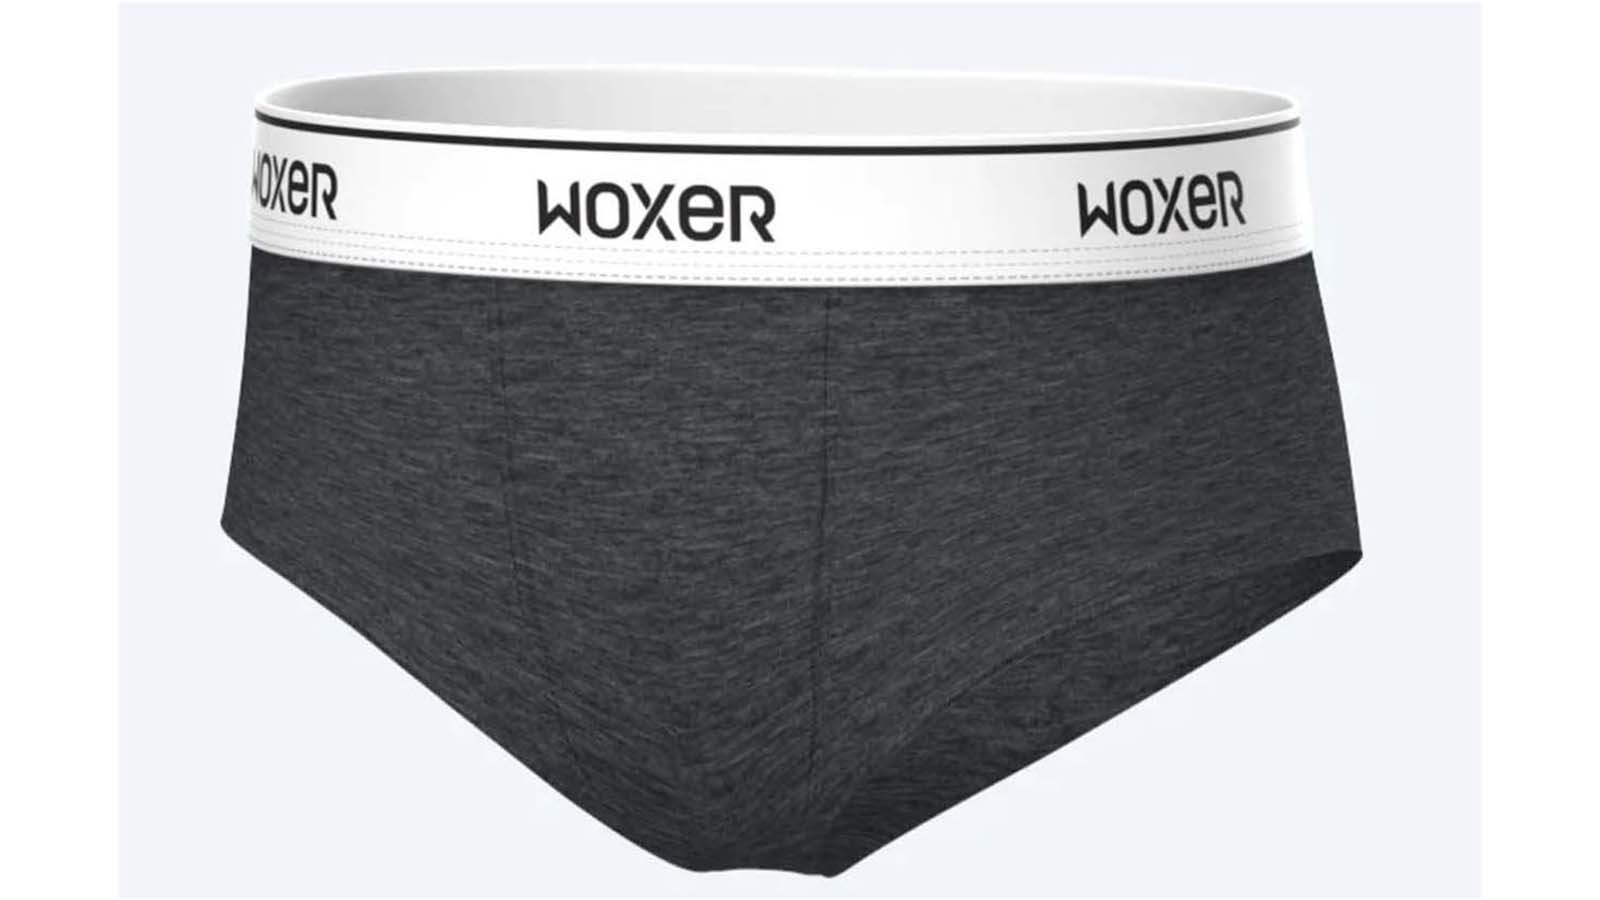 Woxer Serves Up Comfort in Intimate Apparel for Gender-Diverse